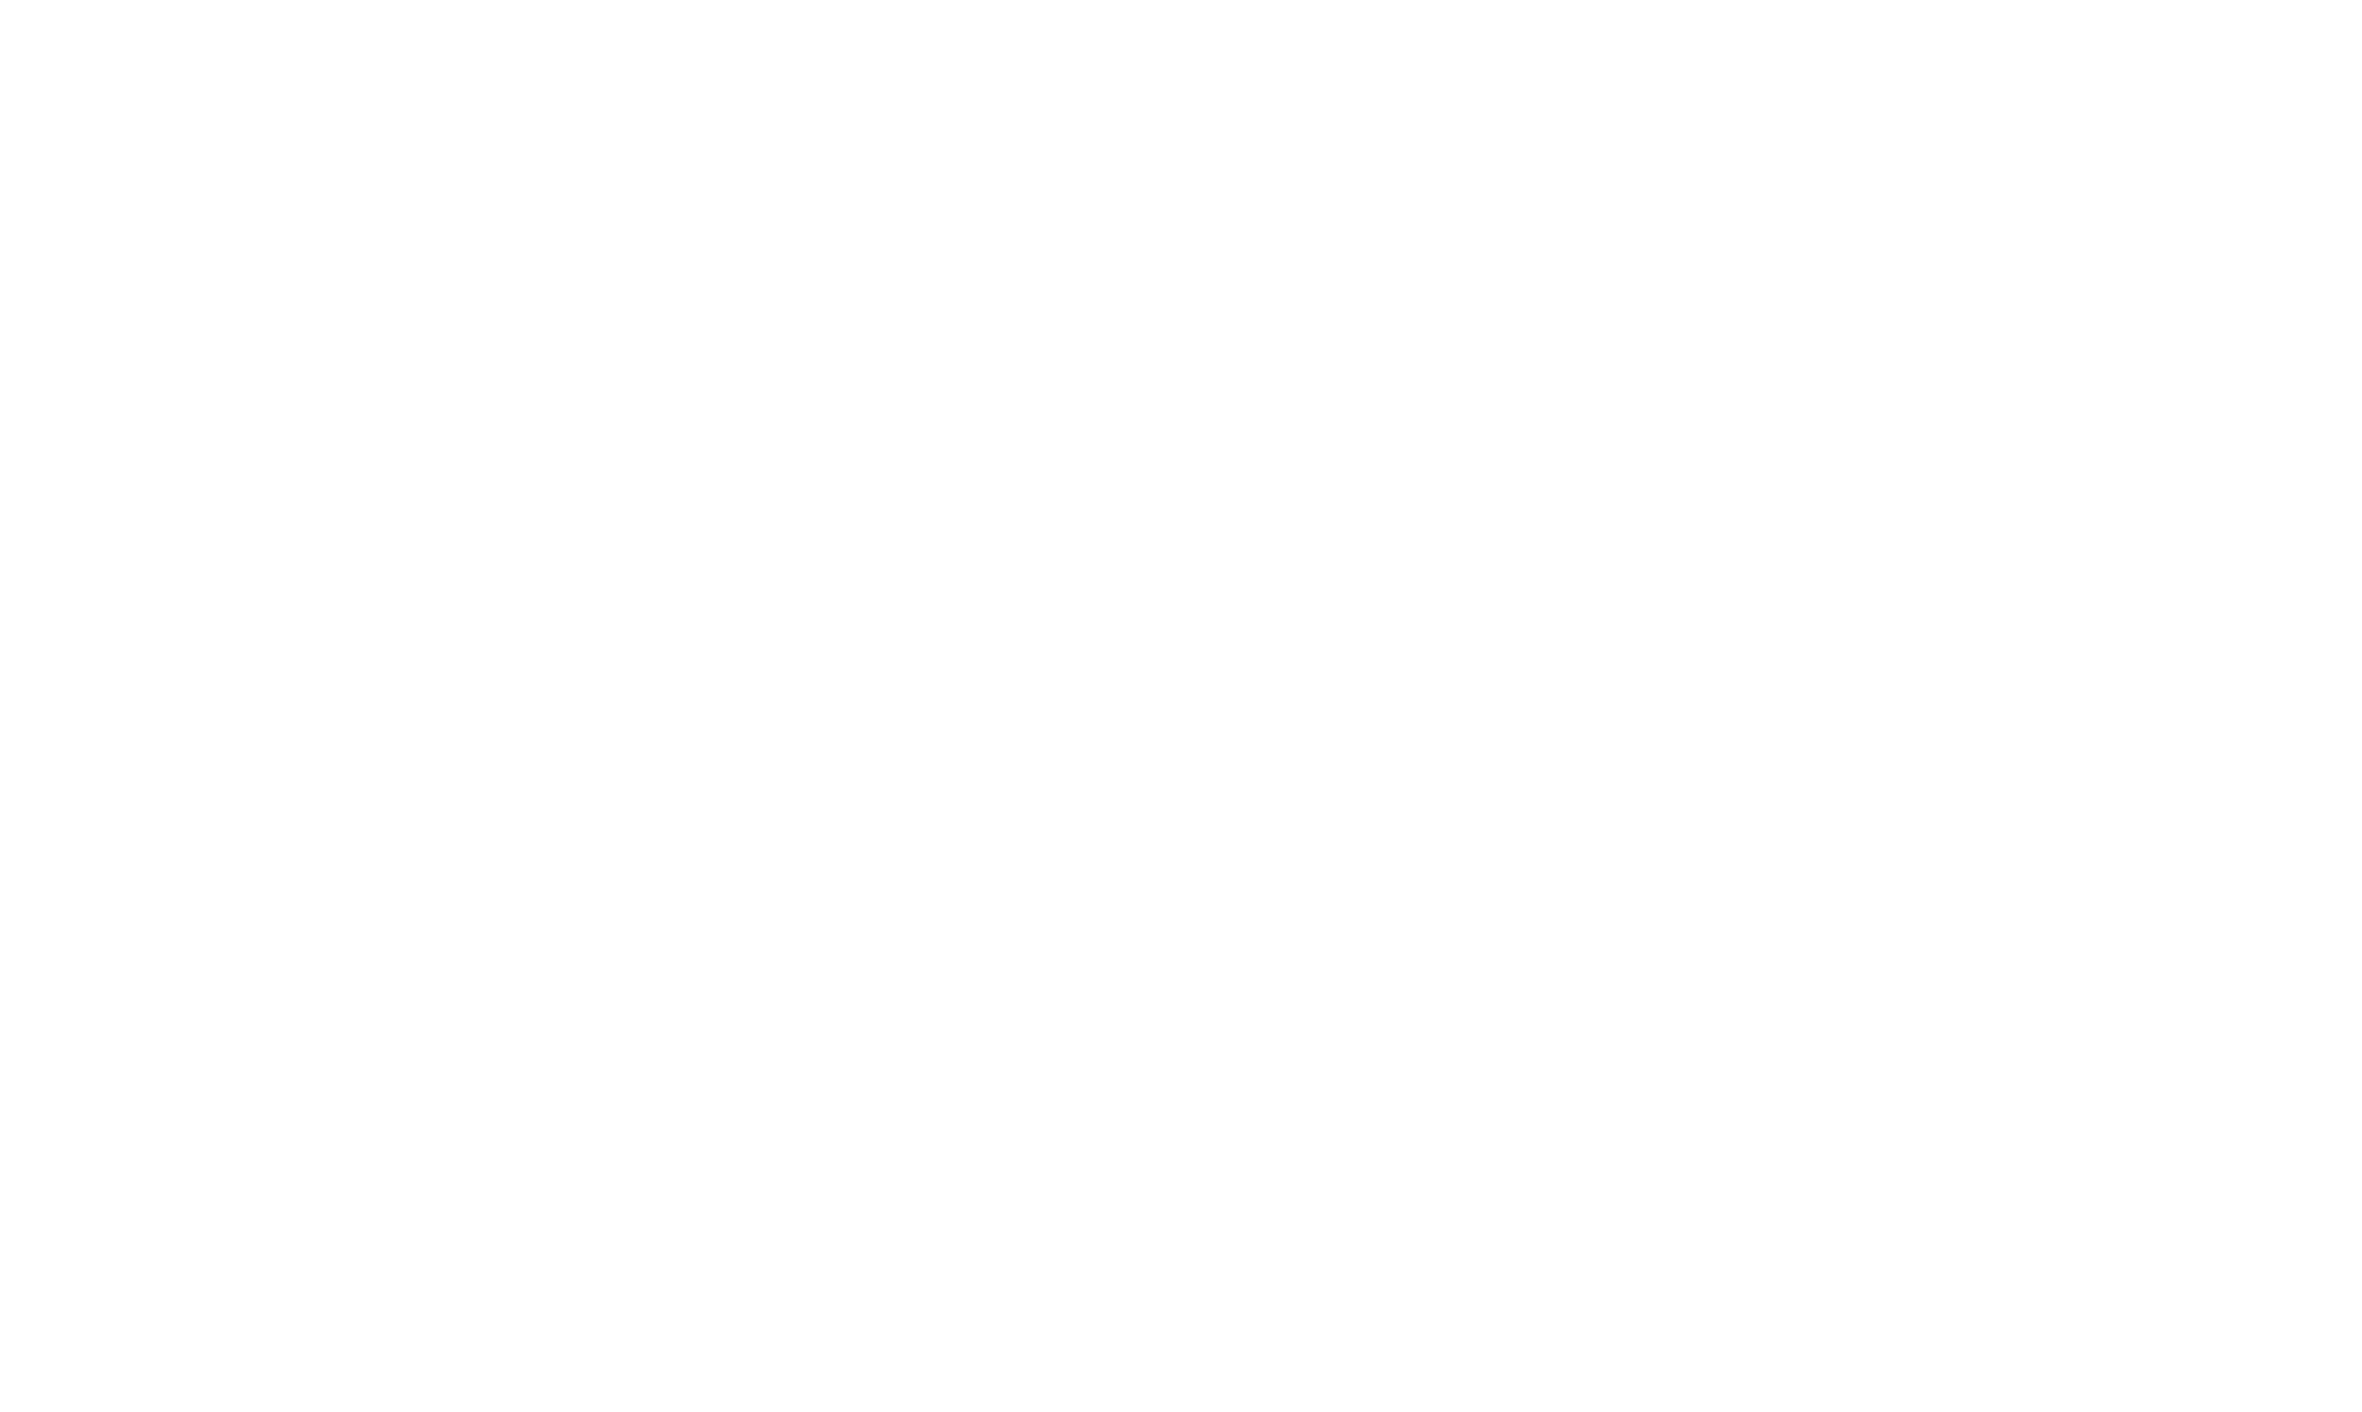 Little Luscious Cafe